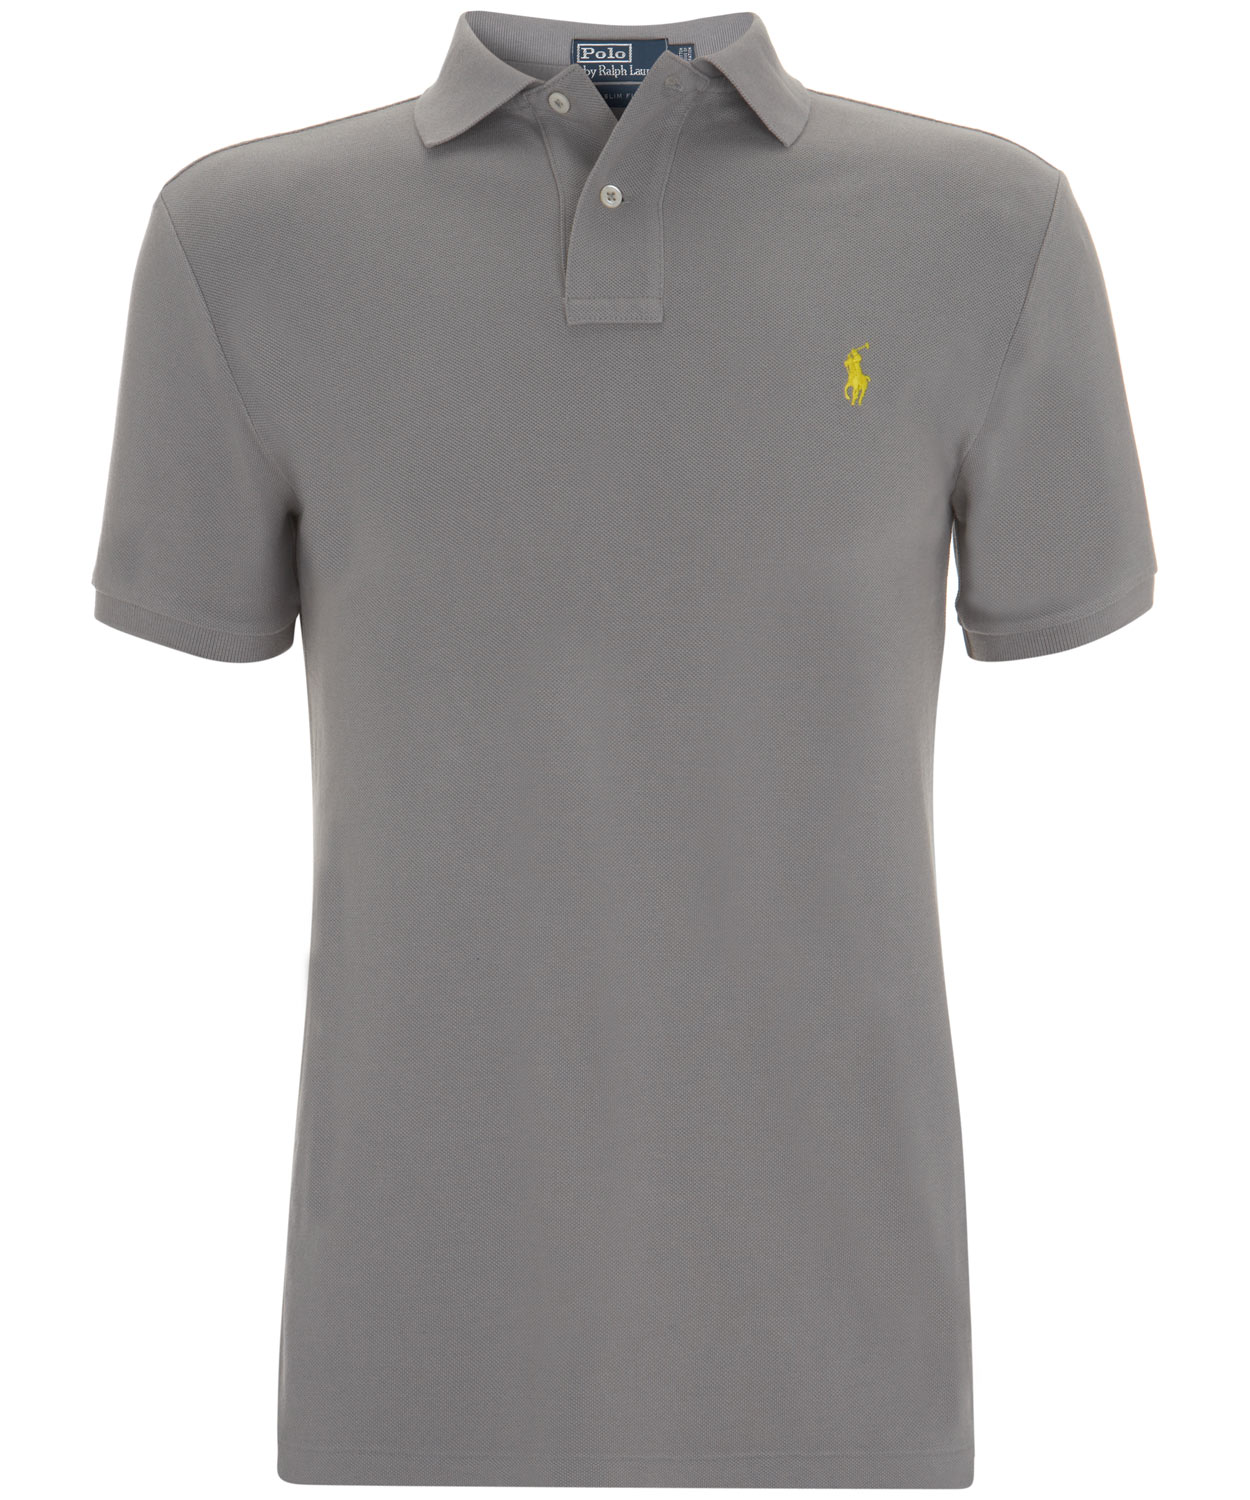 Lyst - Polo Ralph Lauren Grey Slim Fit Mesh Polo Shirt in Gray for Men